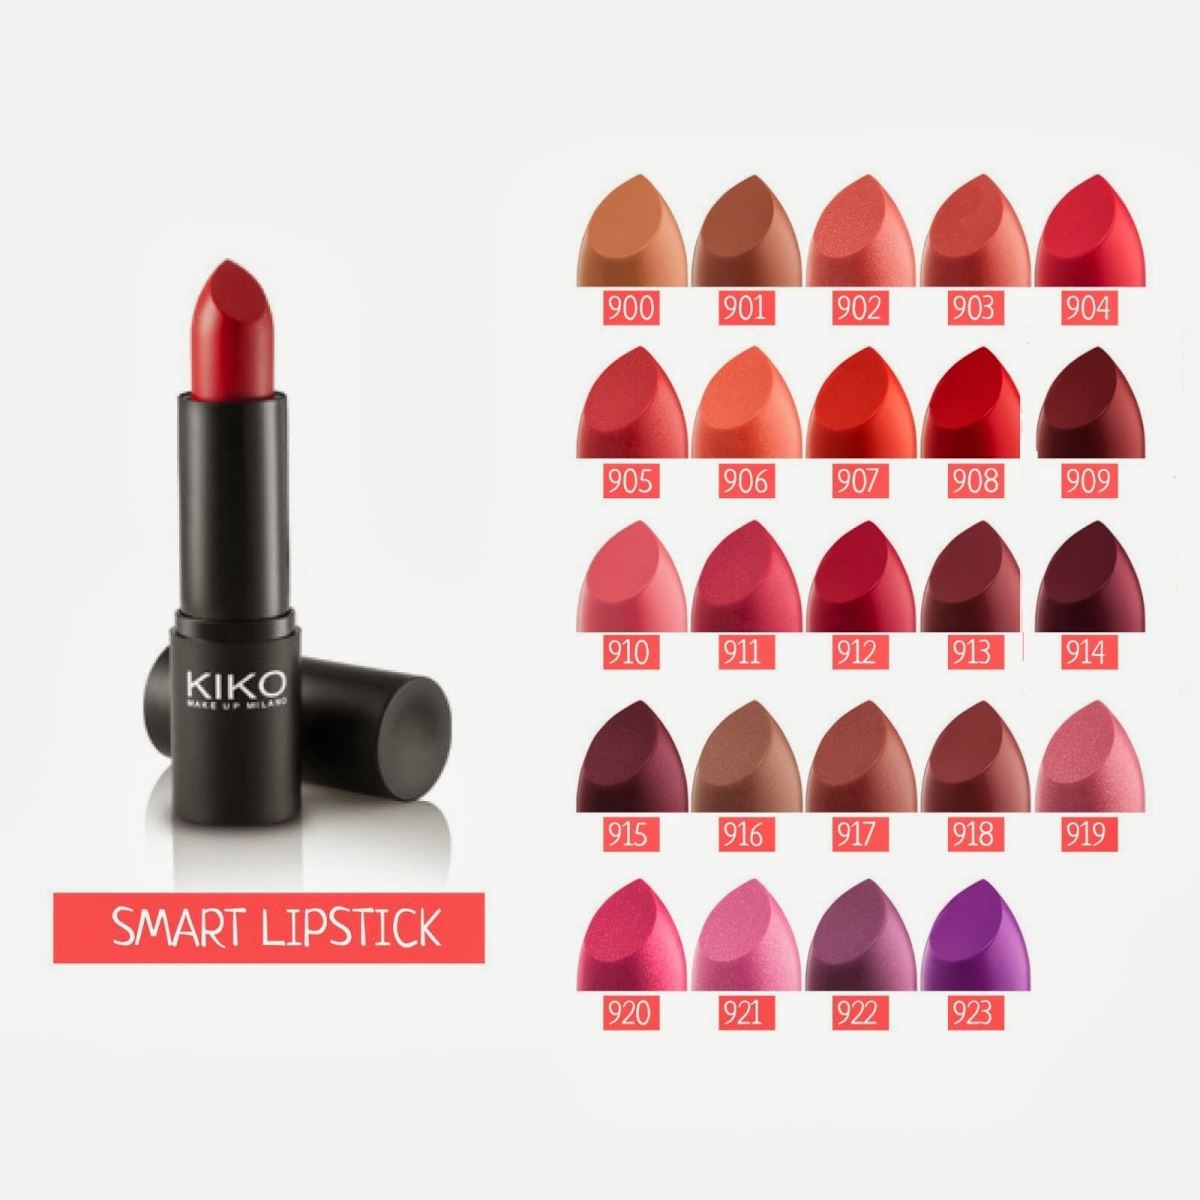 bang-mau-son-kiko-smart-lipstick